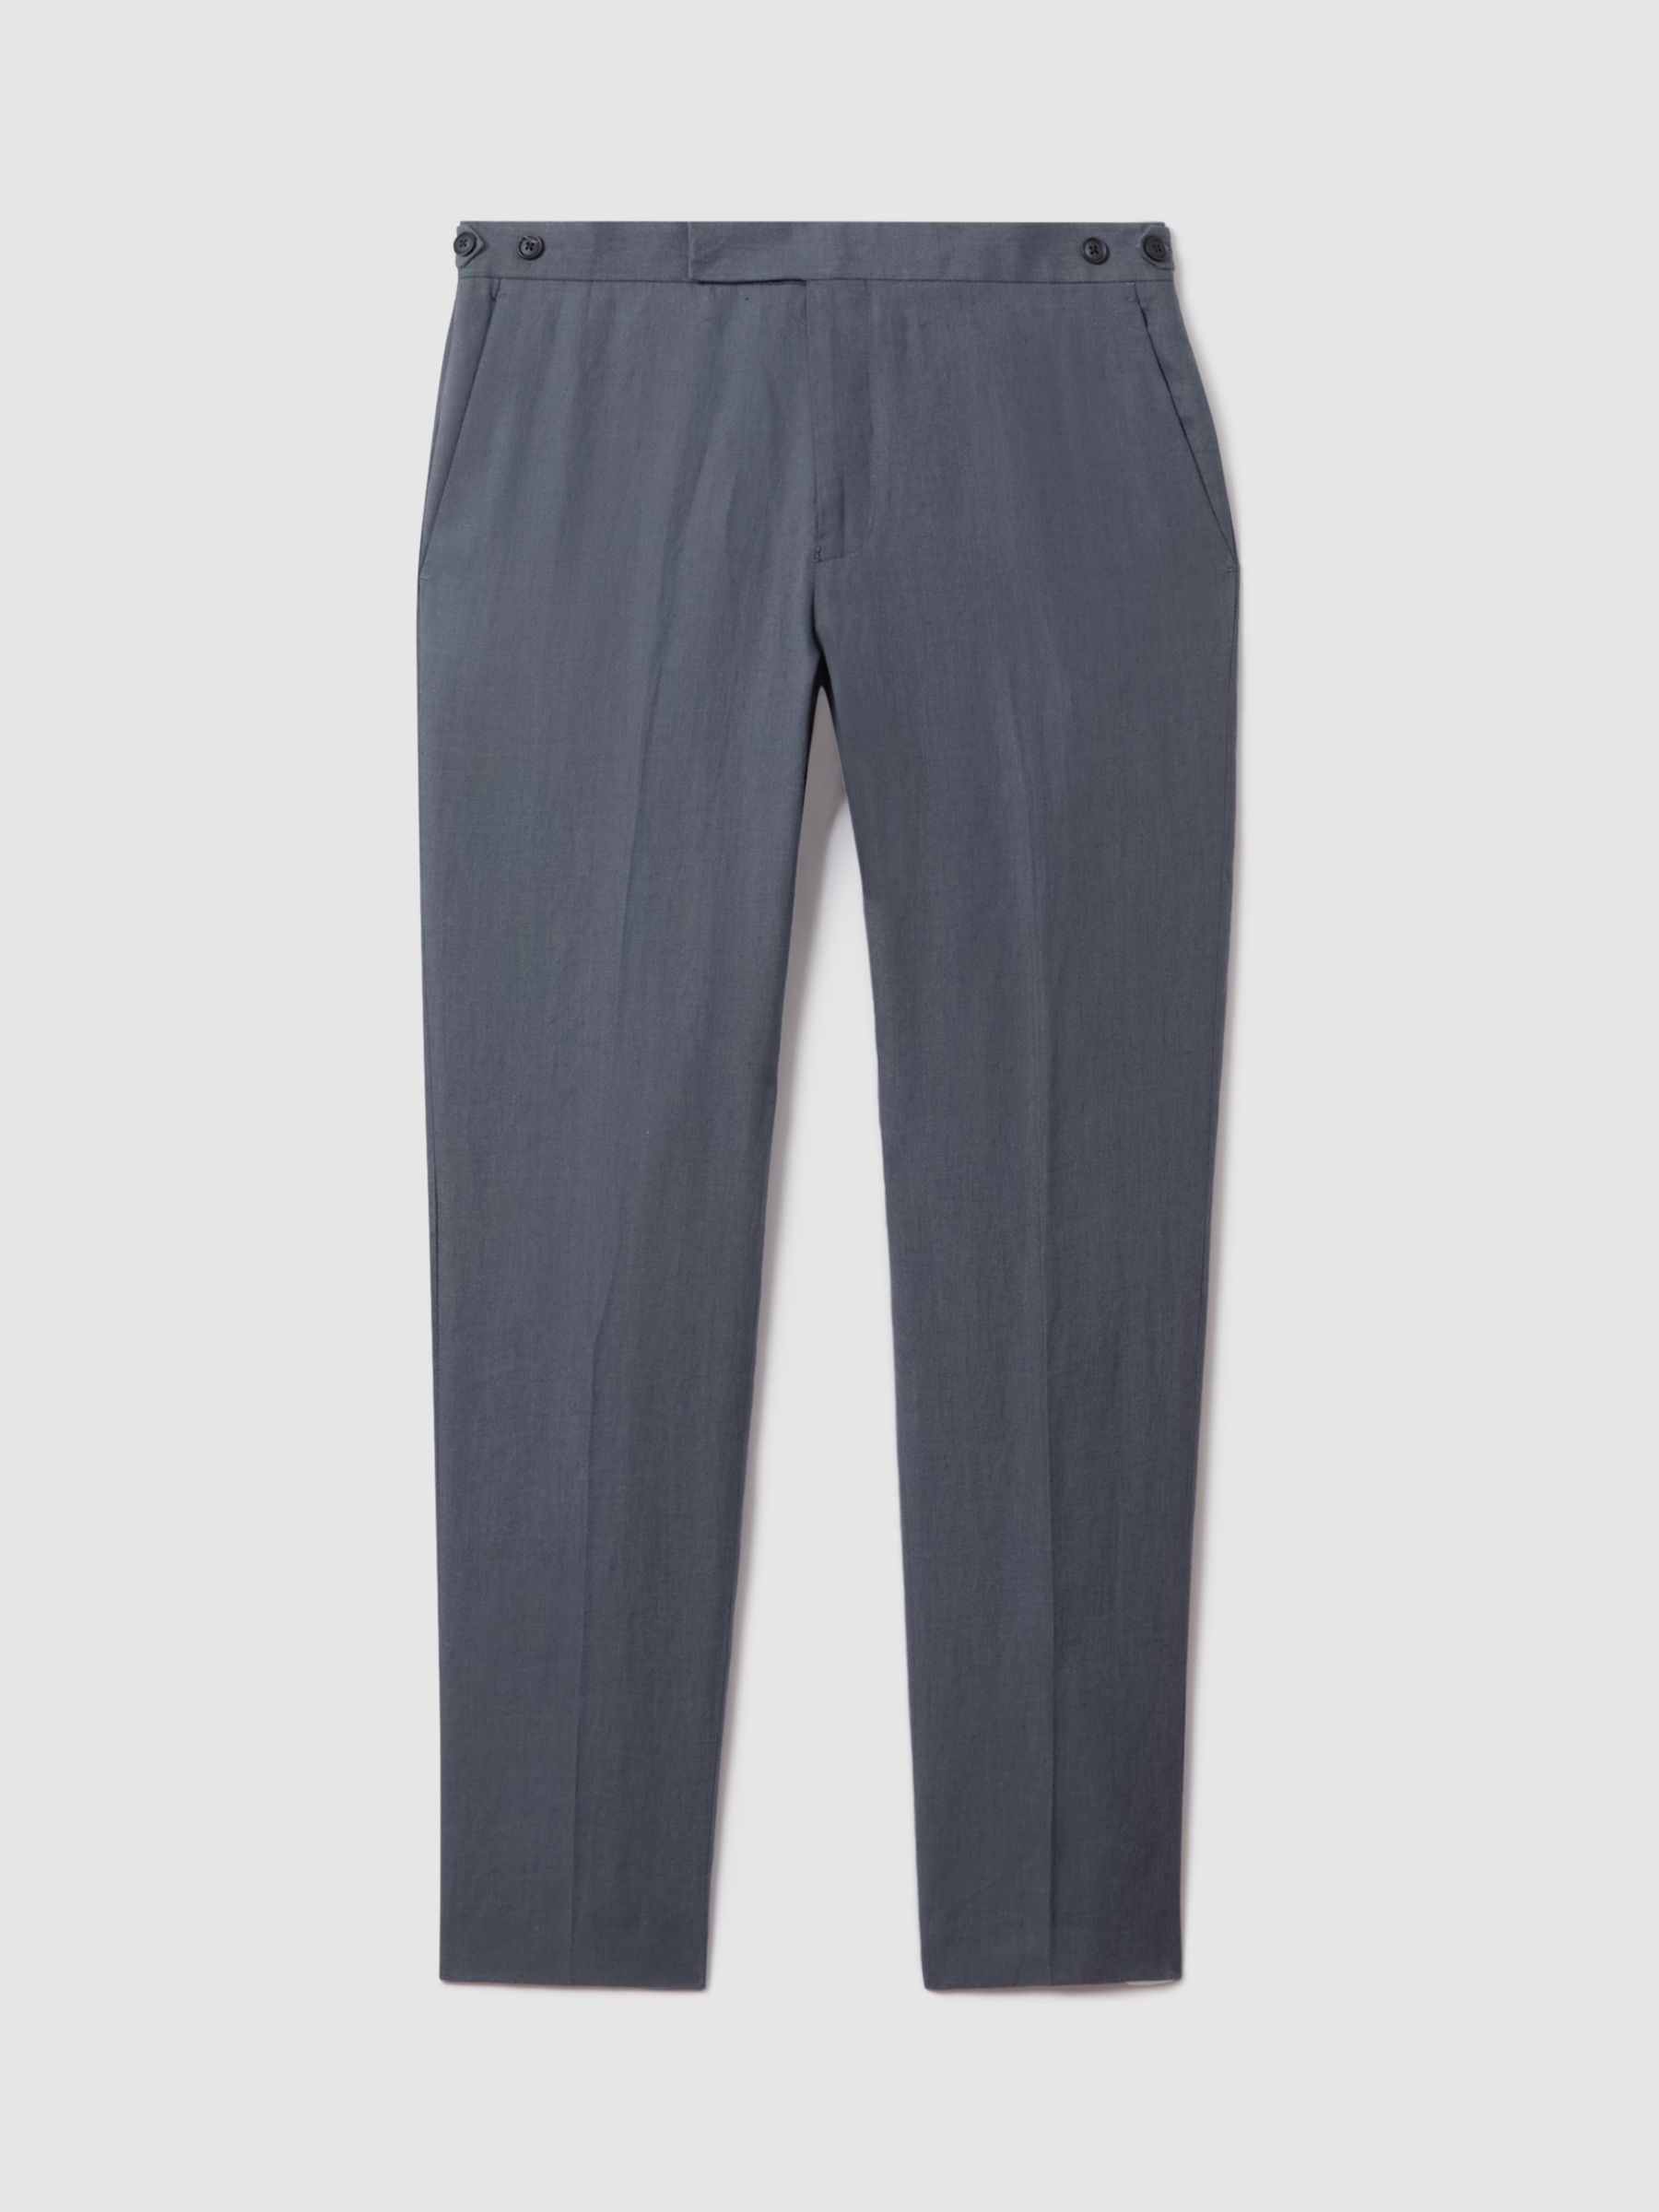 Reiss Kin Linen Slim Fit Mixer Trousers, Airforce Blue, 28R